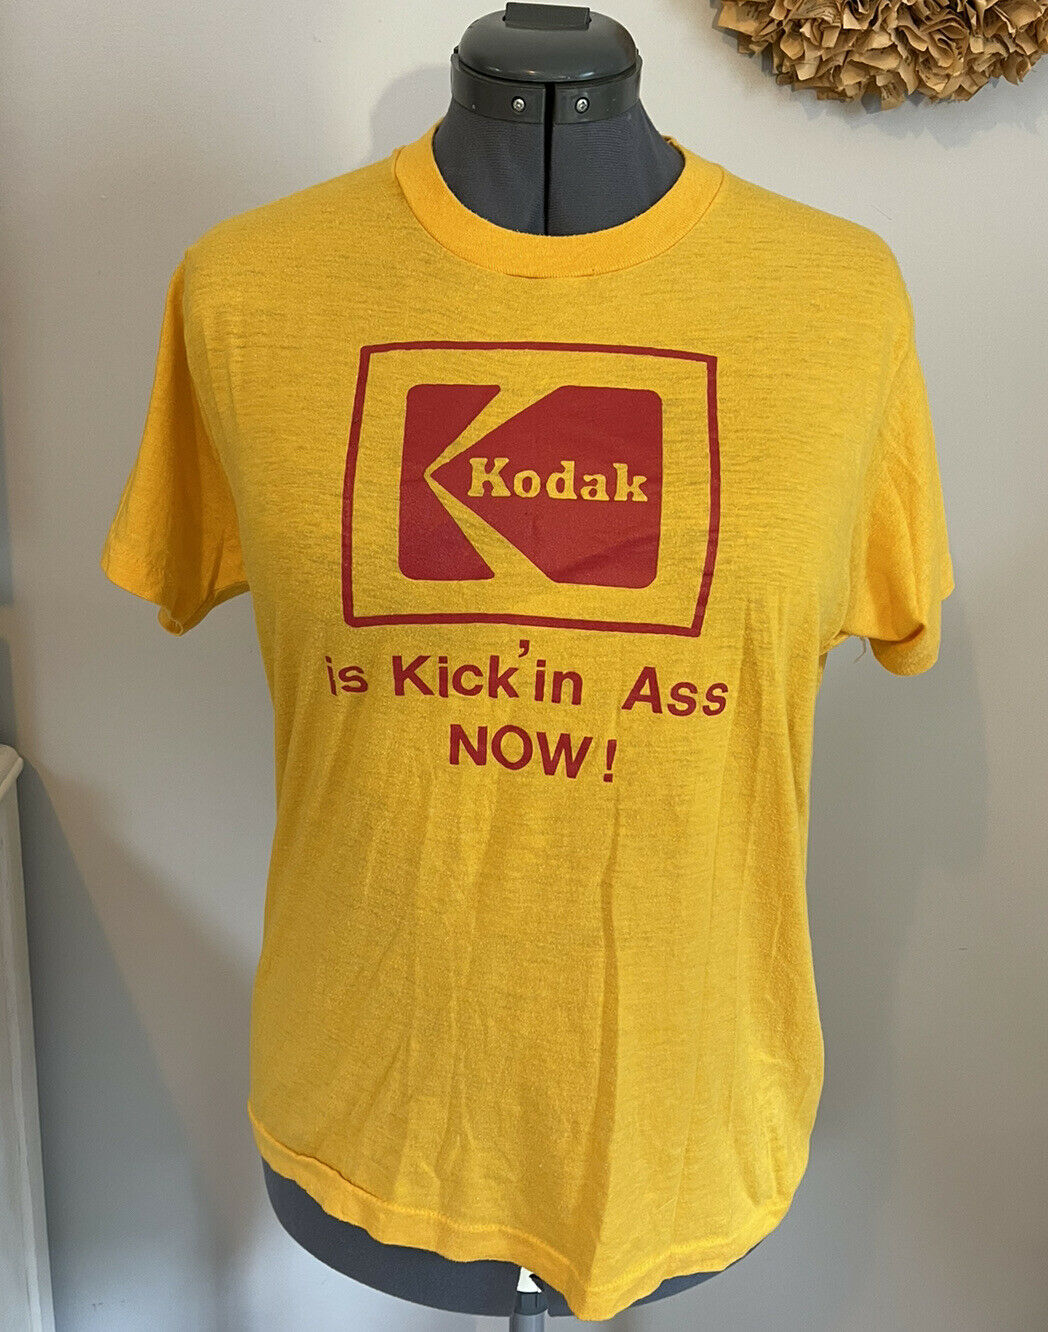 Awesome True Vintage Xl Kodak Single Stitch T-shirt! Kick’in Ass Now!